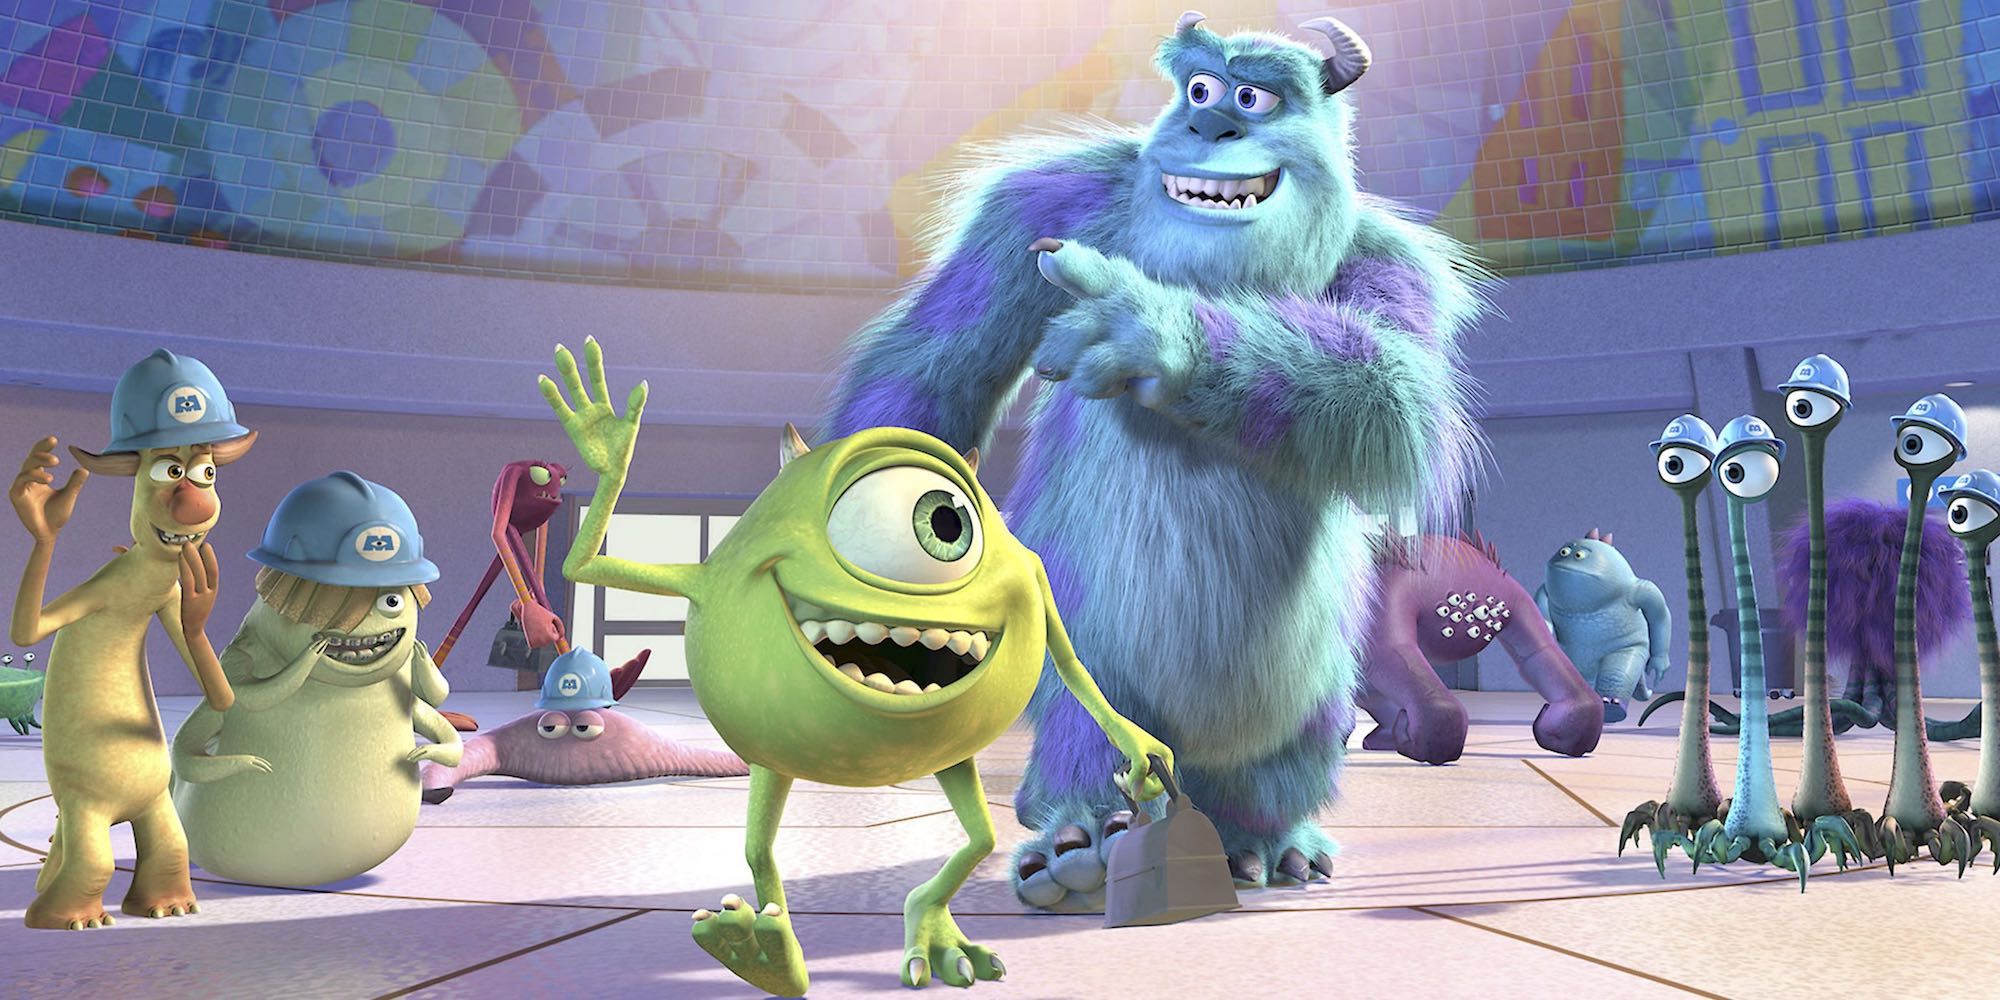 Monsters Inc Disney TV Show Confirms Billy Crystal & John Goodman Return